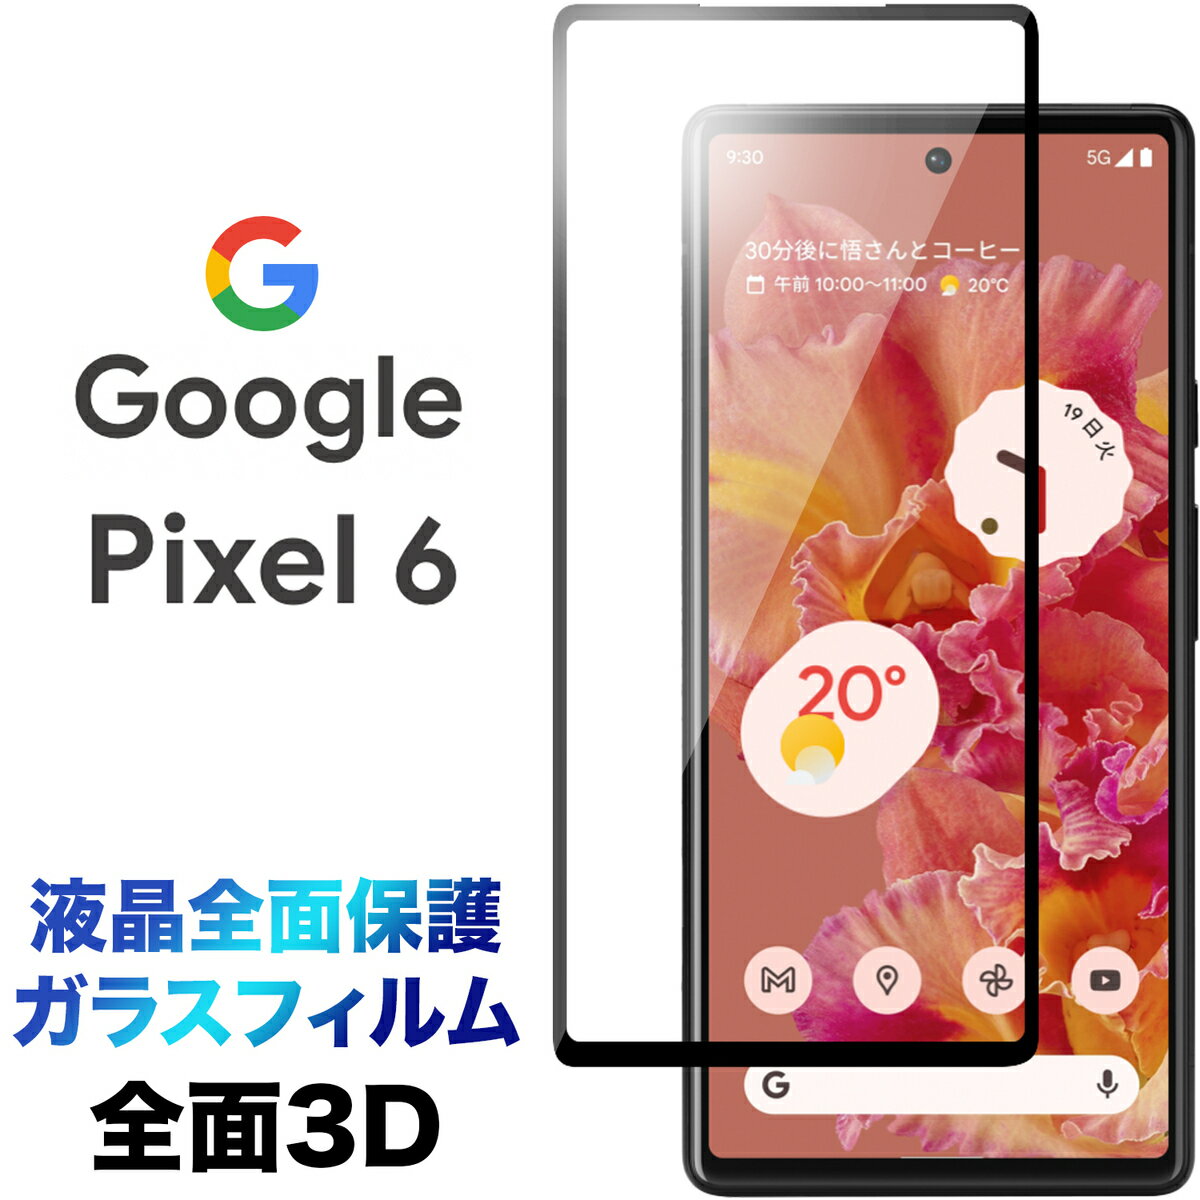 Google Pixel 6 Pixel6 ピクセル6 3D ガラスフィルム 液晶保護 画面保護保護フィルム 液晶全面保護 強化ガラス 硬度9H クリーナーシート付き ラウンドエッジ グーグル ピクセル シックス SoftBank ソフトバンク au エーユー フチまで 全面保護